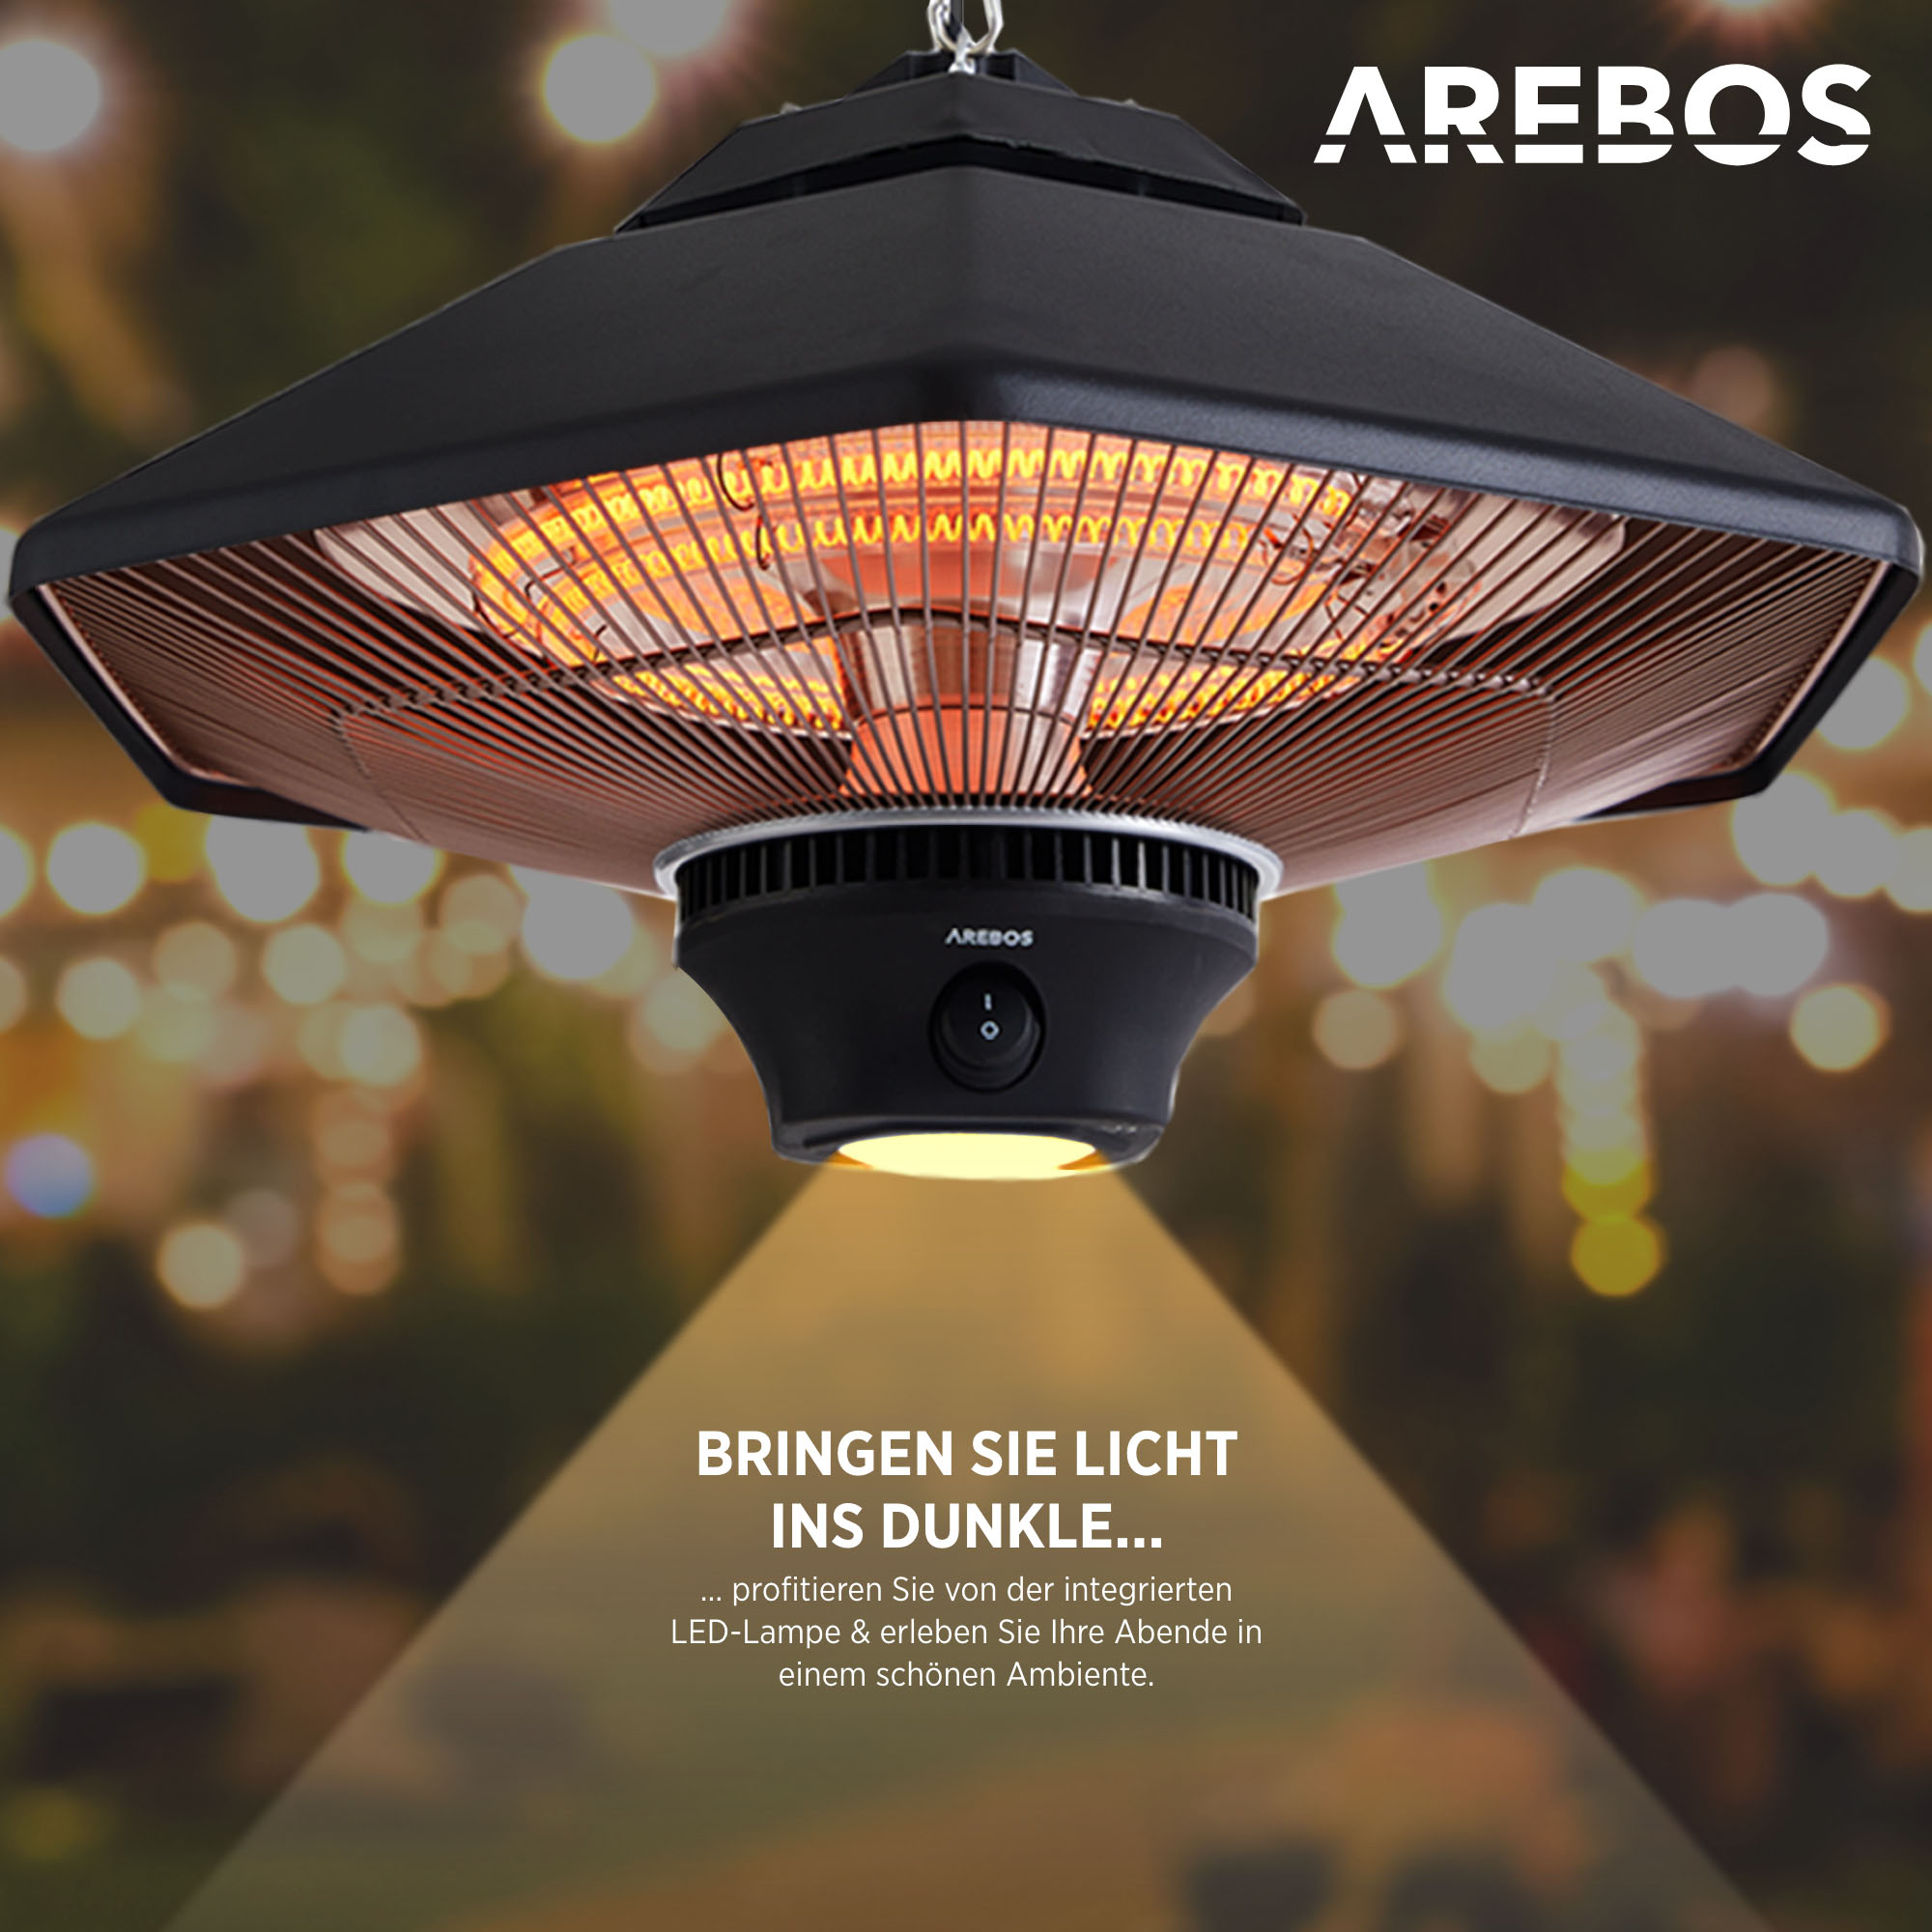 AREBOS Fernbedienung Hexa hexagonal | Deckenheizstrahler Watt) + LED-Lampe (2000